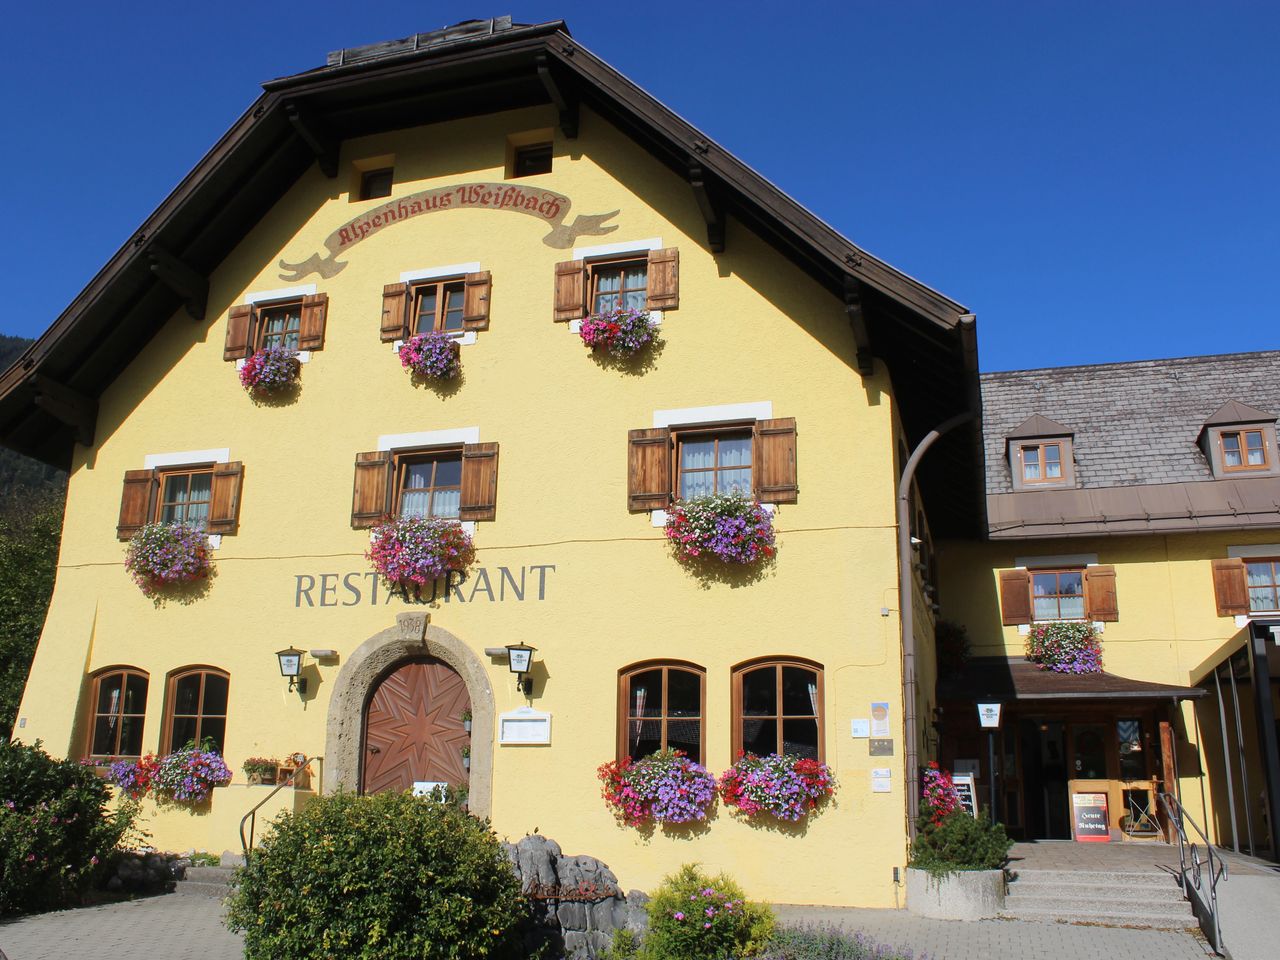 6 Tage Silvesterzauber im Berchtesgadener Land